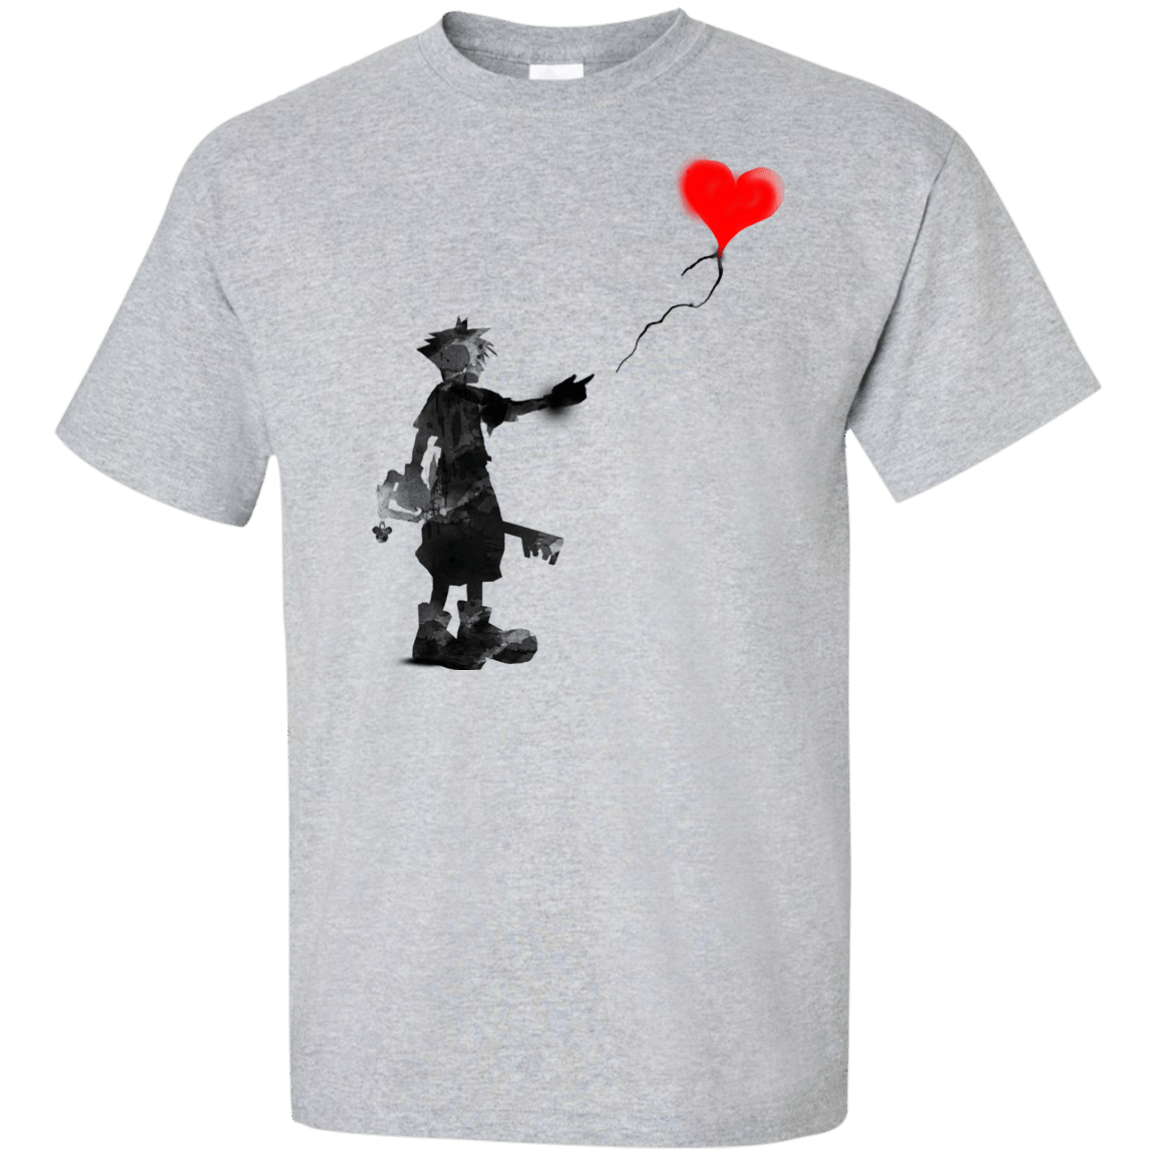 Boy and Balloon Tall T-Shirt